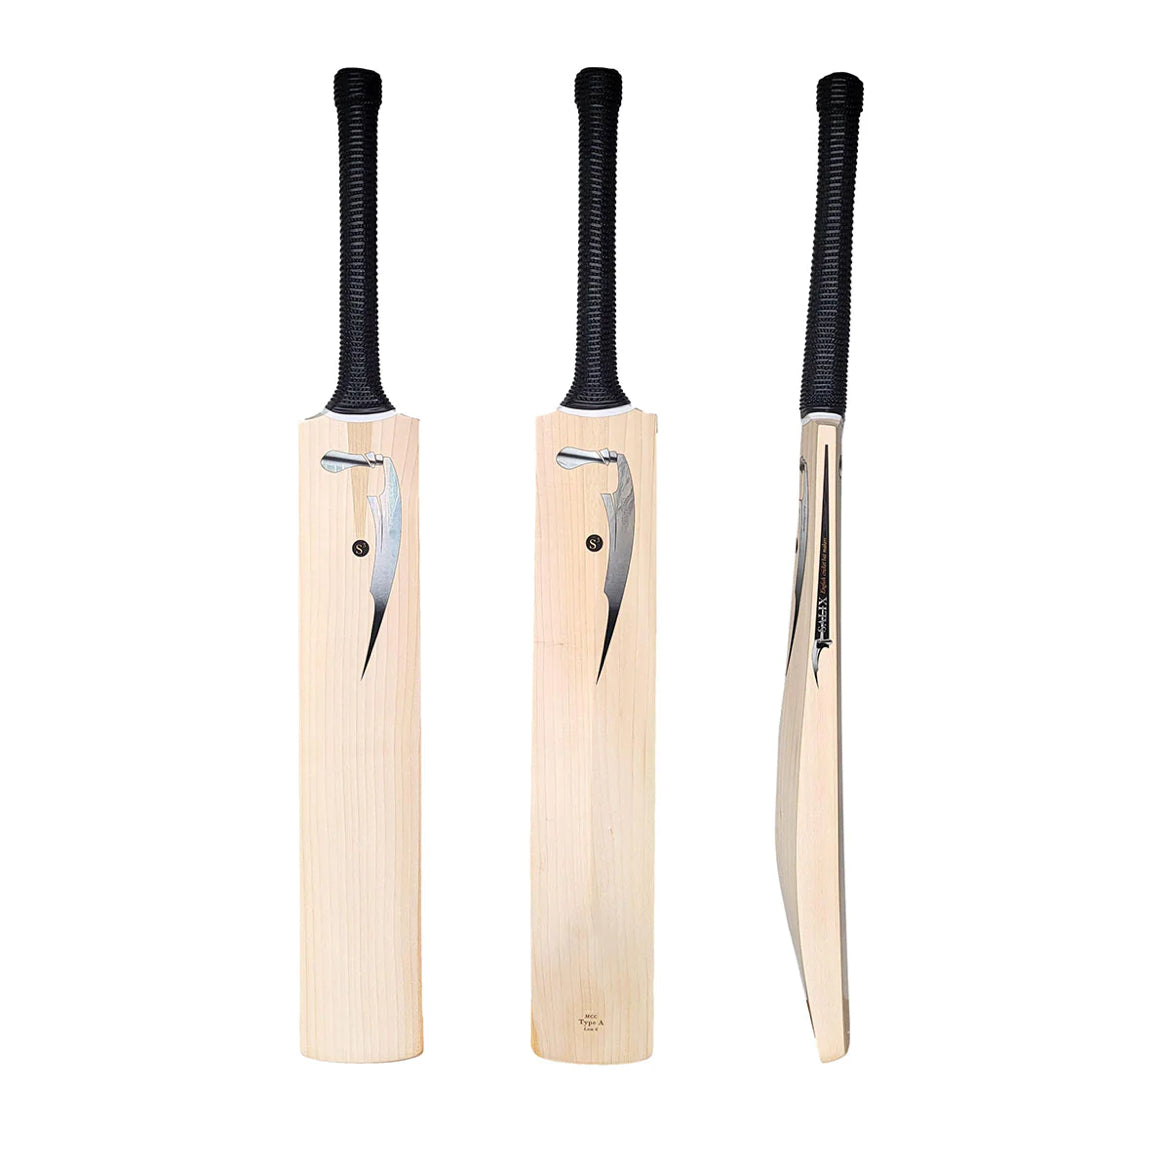 Salix Knife Finite Cricket Bat - The Cricket Store